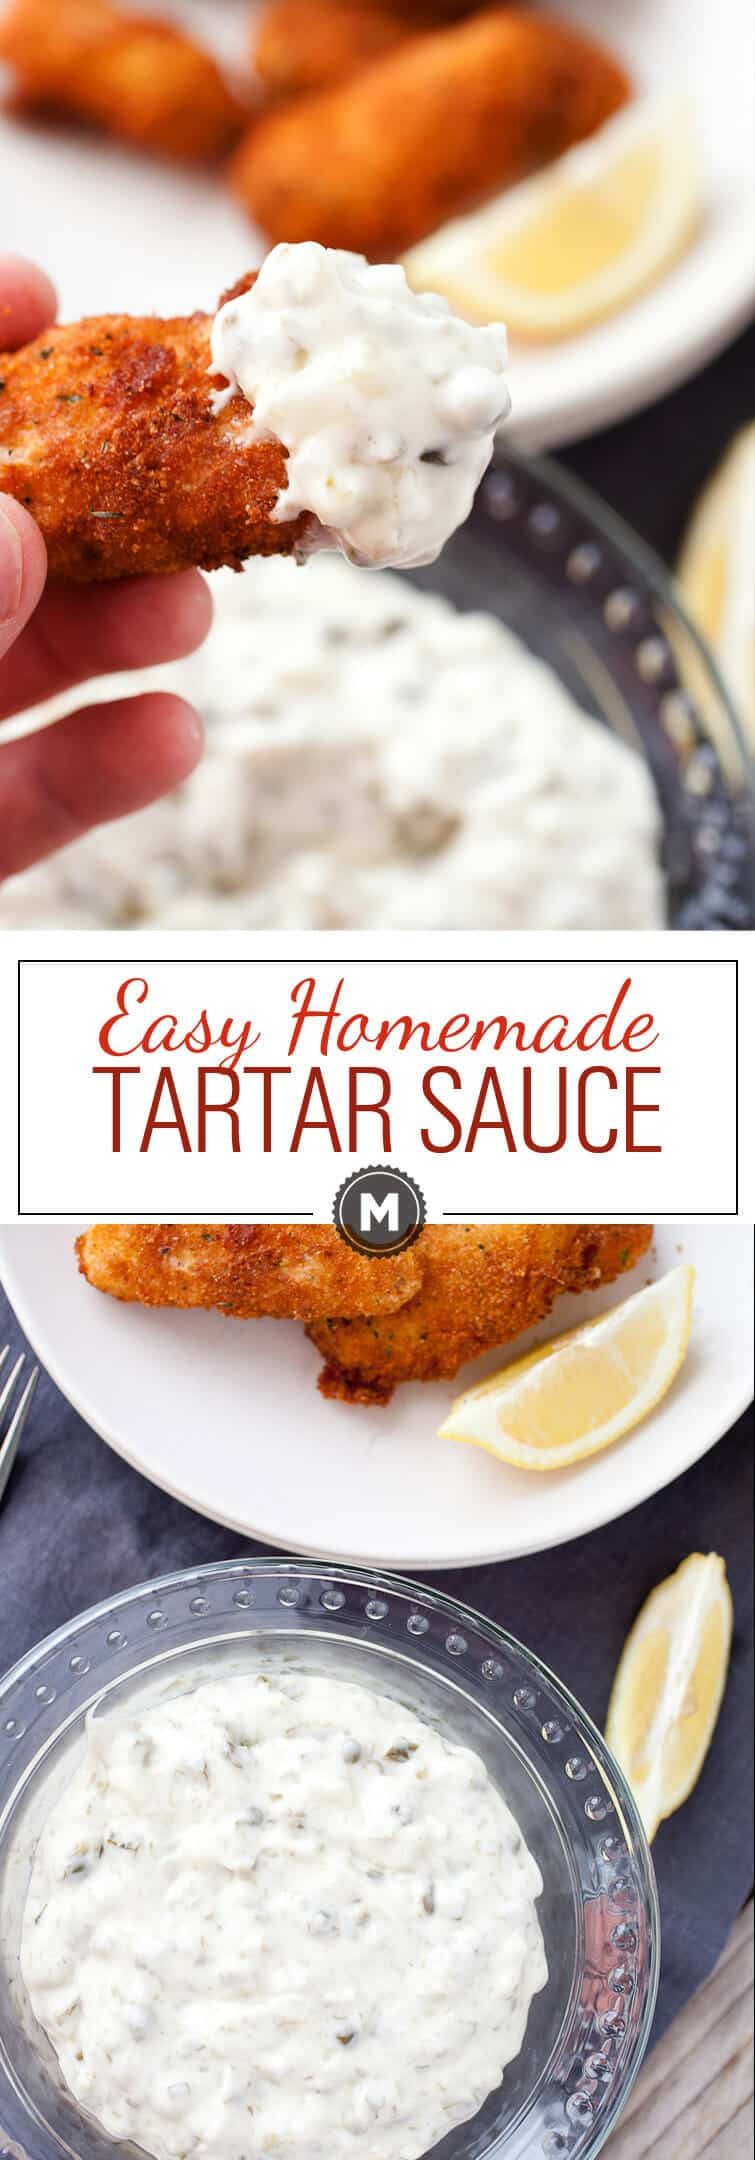 Best ideas about DIY Tartar Sauce
. Save or Pin Easy Homemade Tartar Sauce Macheesmo Now.